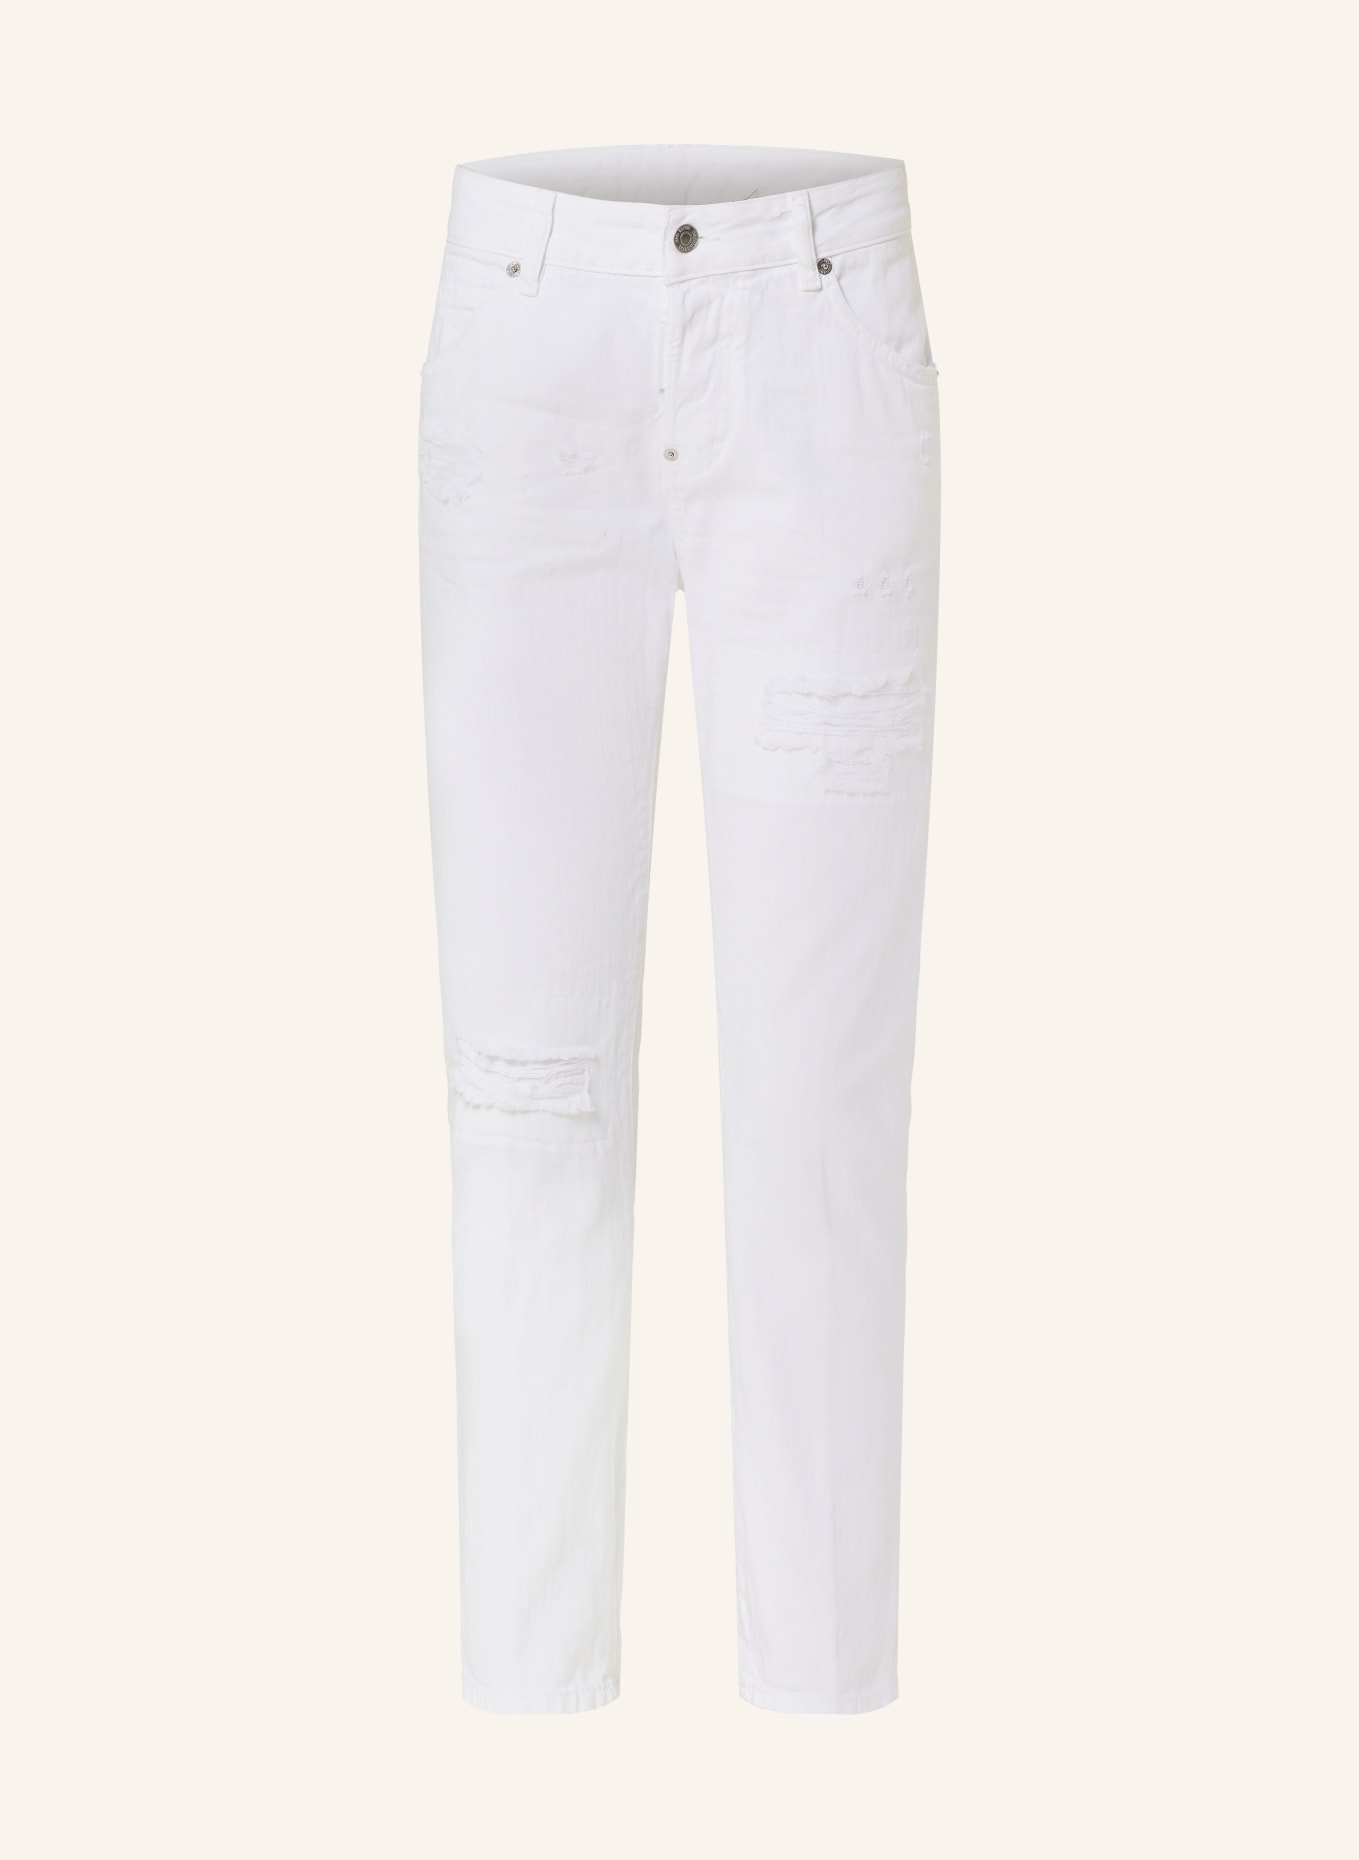 DSQUARED2 Jeans COOL GIRL, Farbe: 100 WHITE (Bild 1)